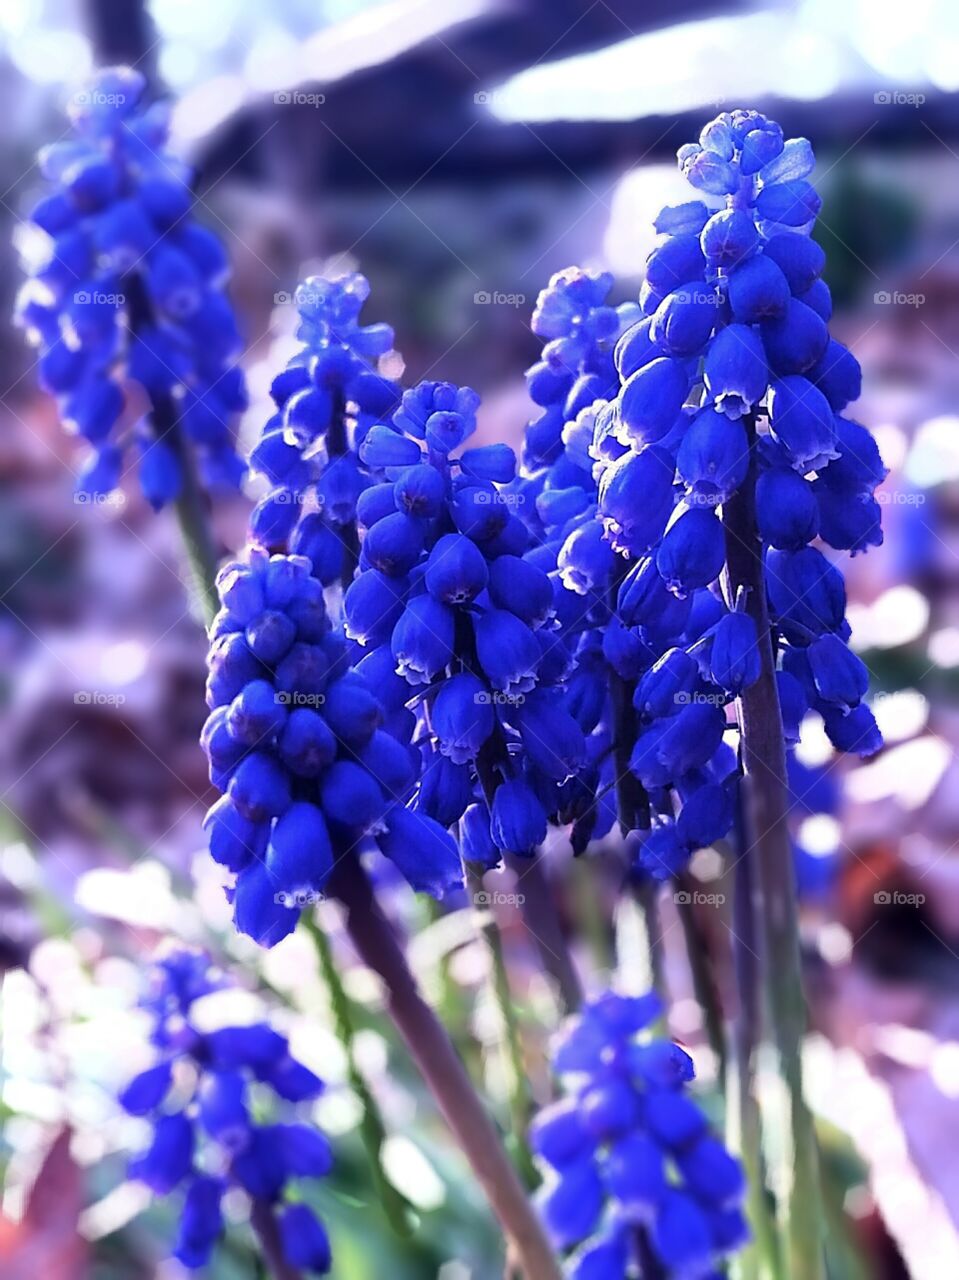 Blue Grape Hyacinth or Muscari